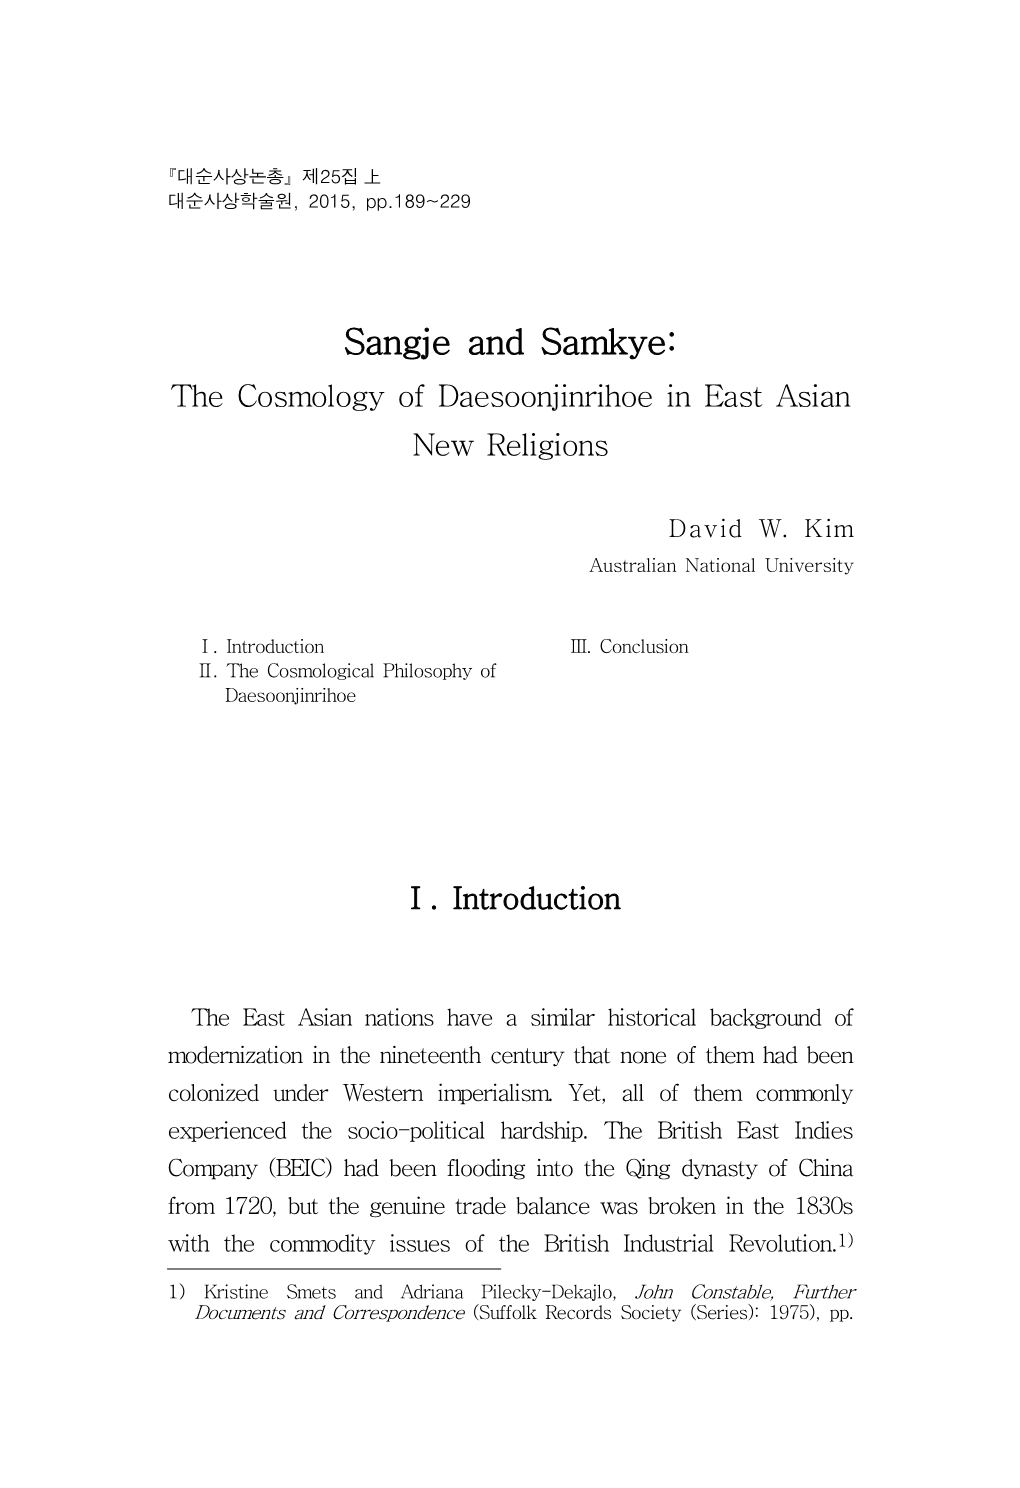 Sangje and Samkye: the Cosmology of Daesoonjinrihoe in East Asian New Religions